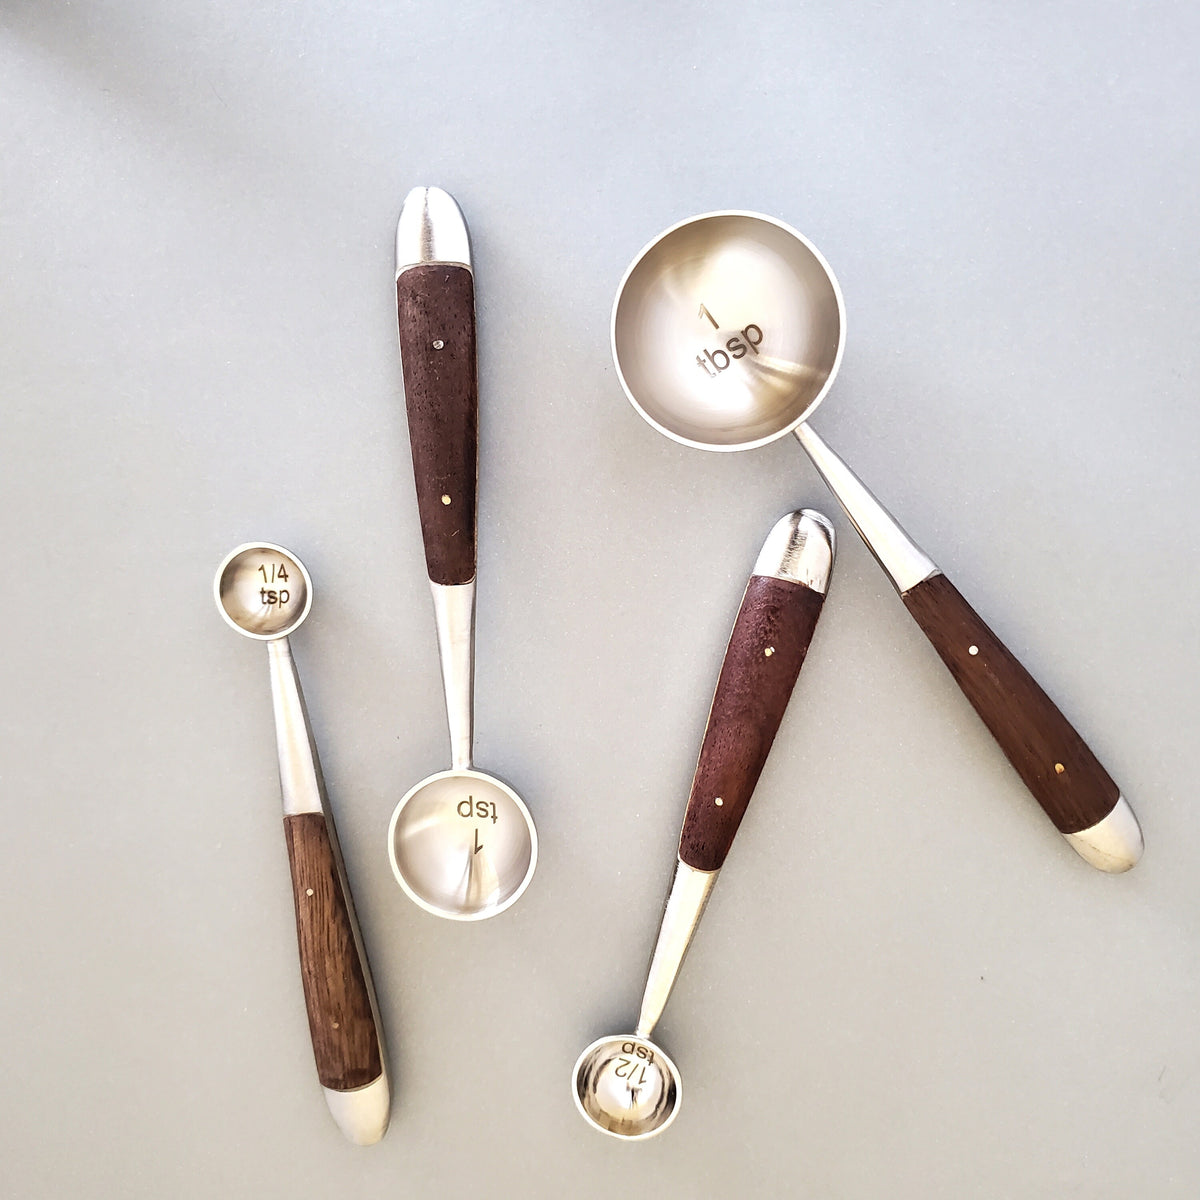 Measuring Spoonswooden Measuring Spoonswood Measuring Spoons  Kitchenwarekitchen Utensilsmeasuring Spoon Set Baking 